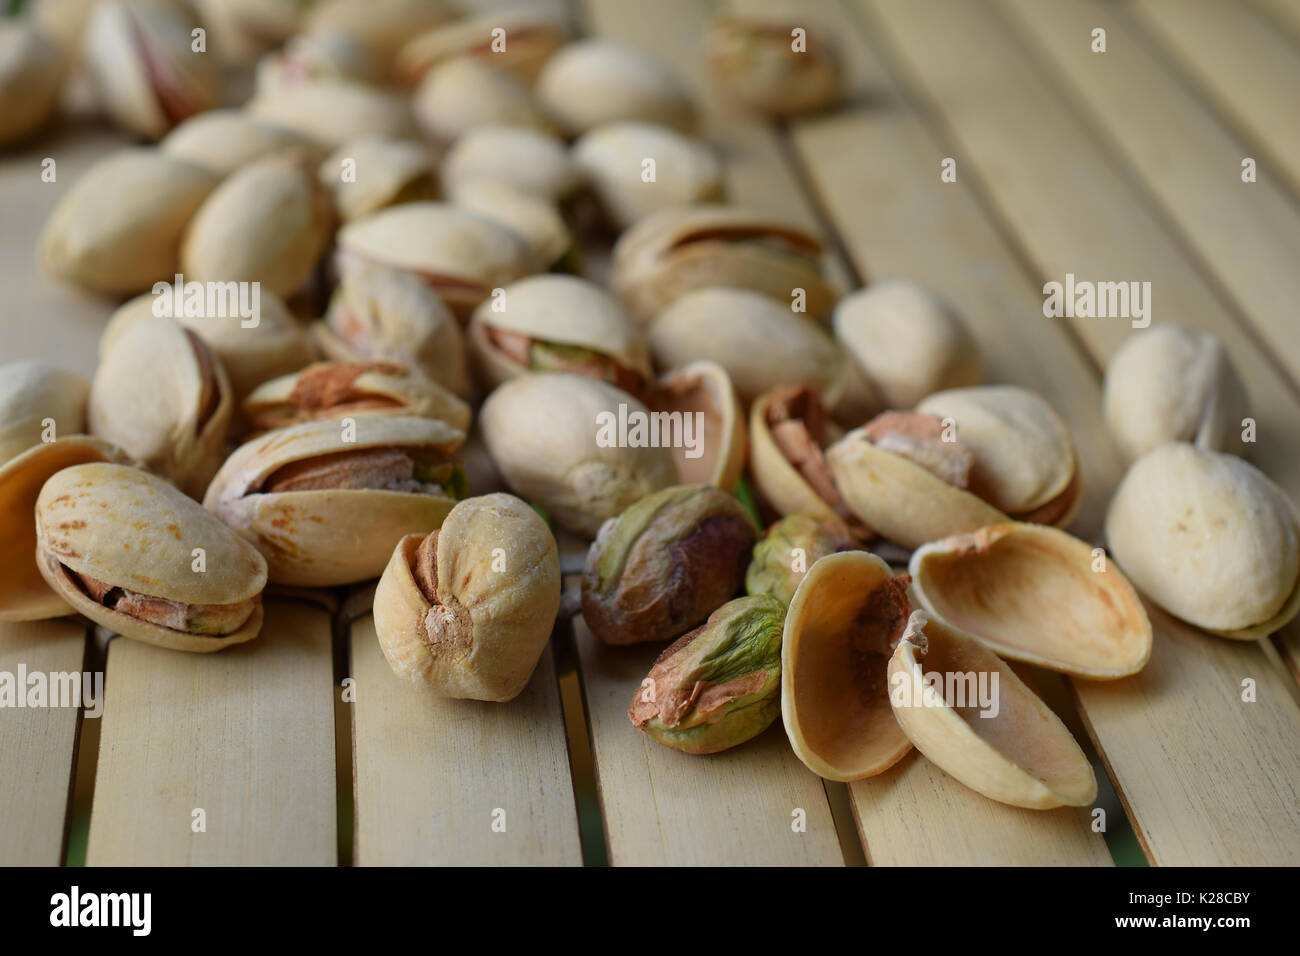 Pistachio nuts on bamboo table. Horizontal image. Stock Photo